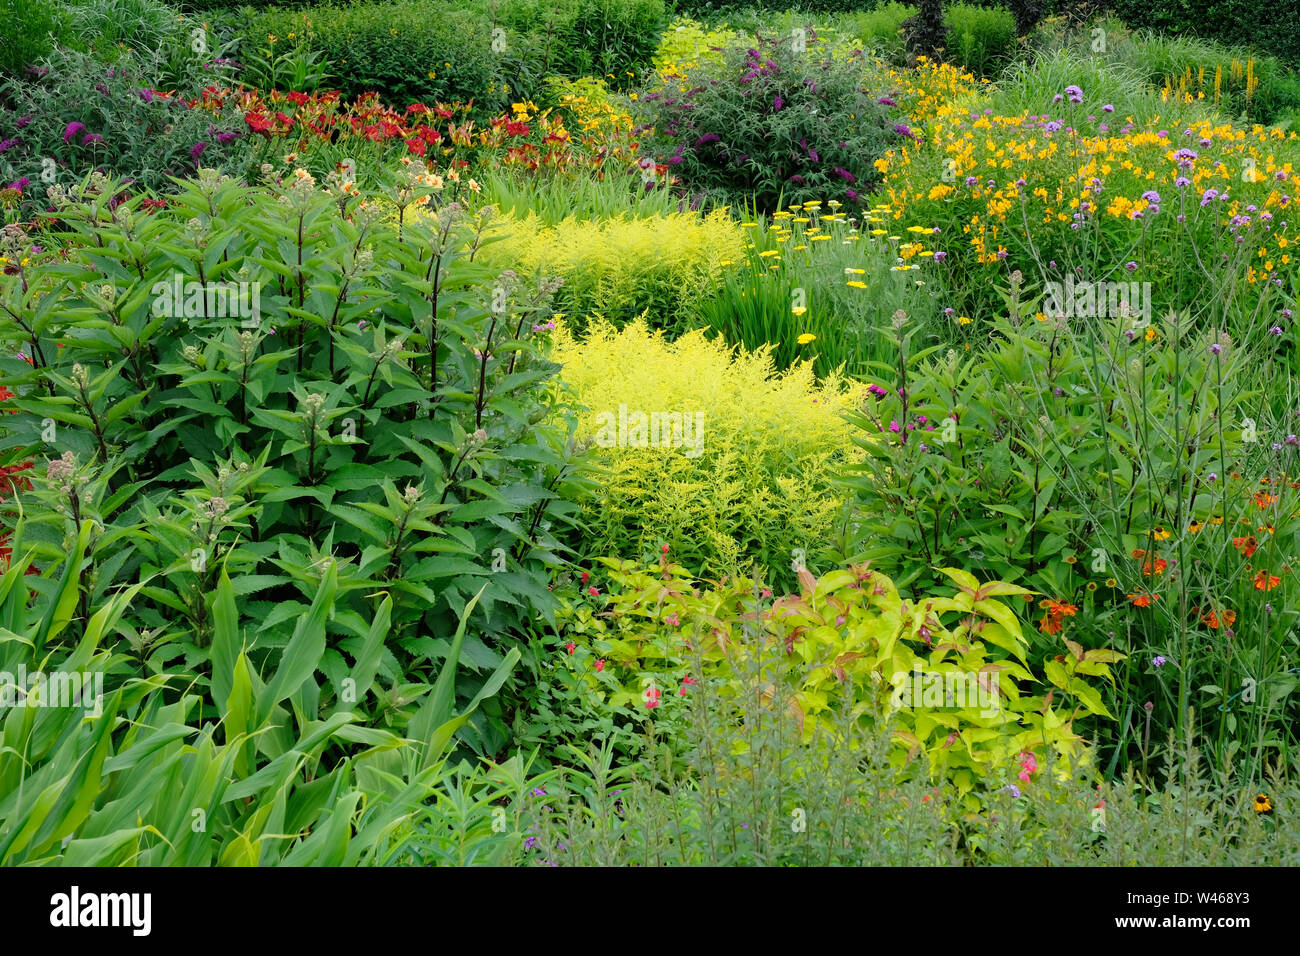 A summer flowerbed full of assorted flowering perennials, UK - John Gollop Stock Photo